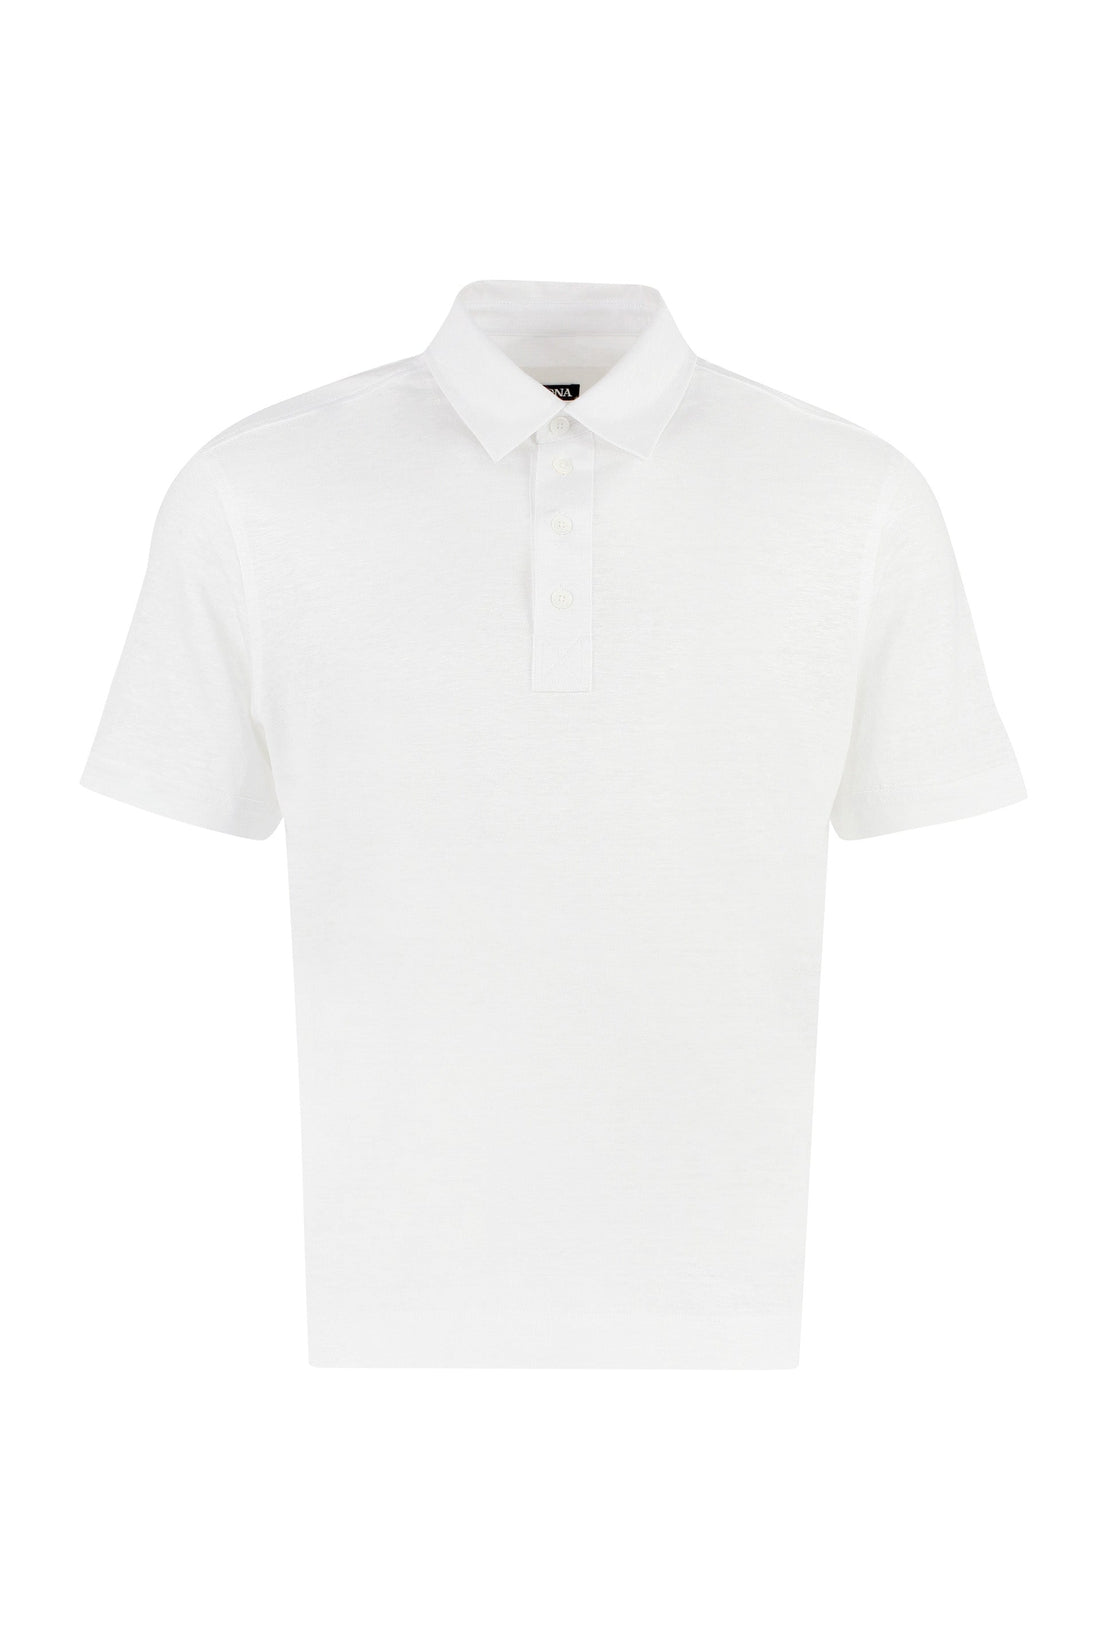 Zegna-OUTLET-SALE-Short sleeve polo shirt-ARCHIVIST